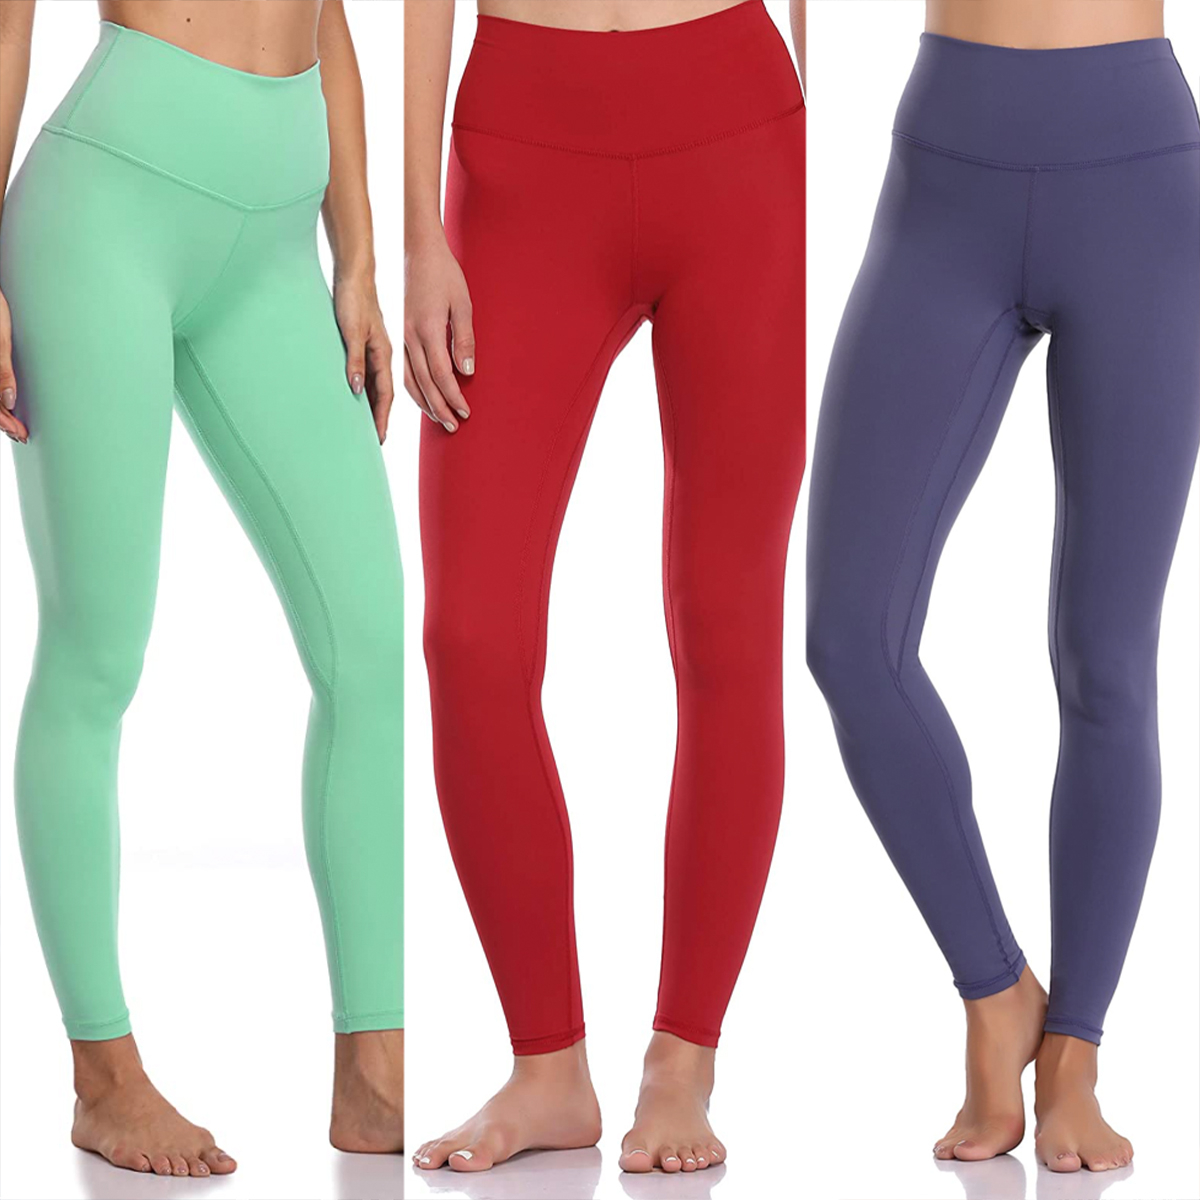 Comfortable and Stylish ColorfulKoala Yoga Pants Leggings Video Review 